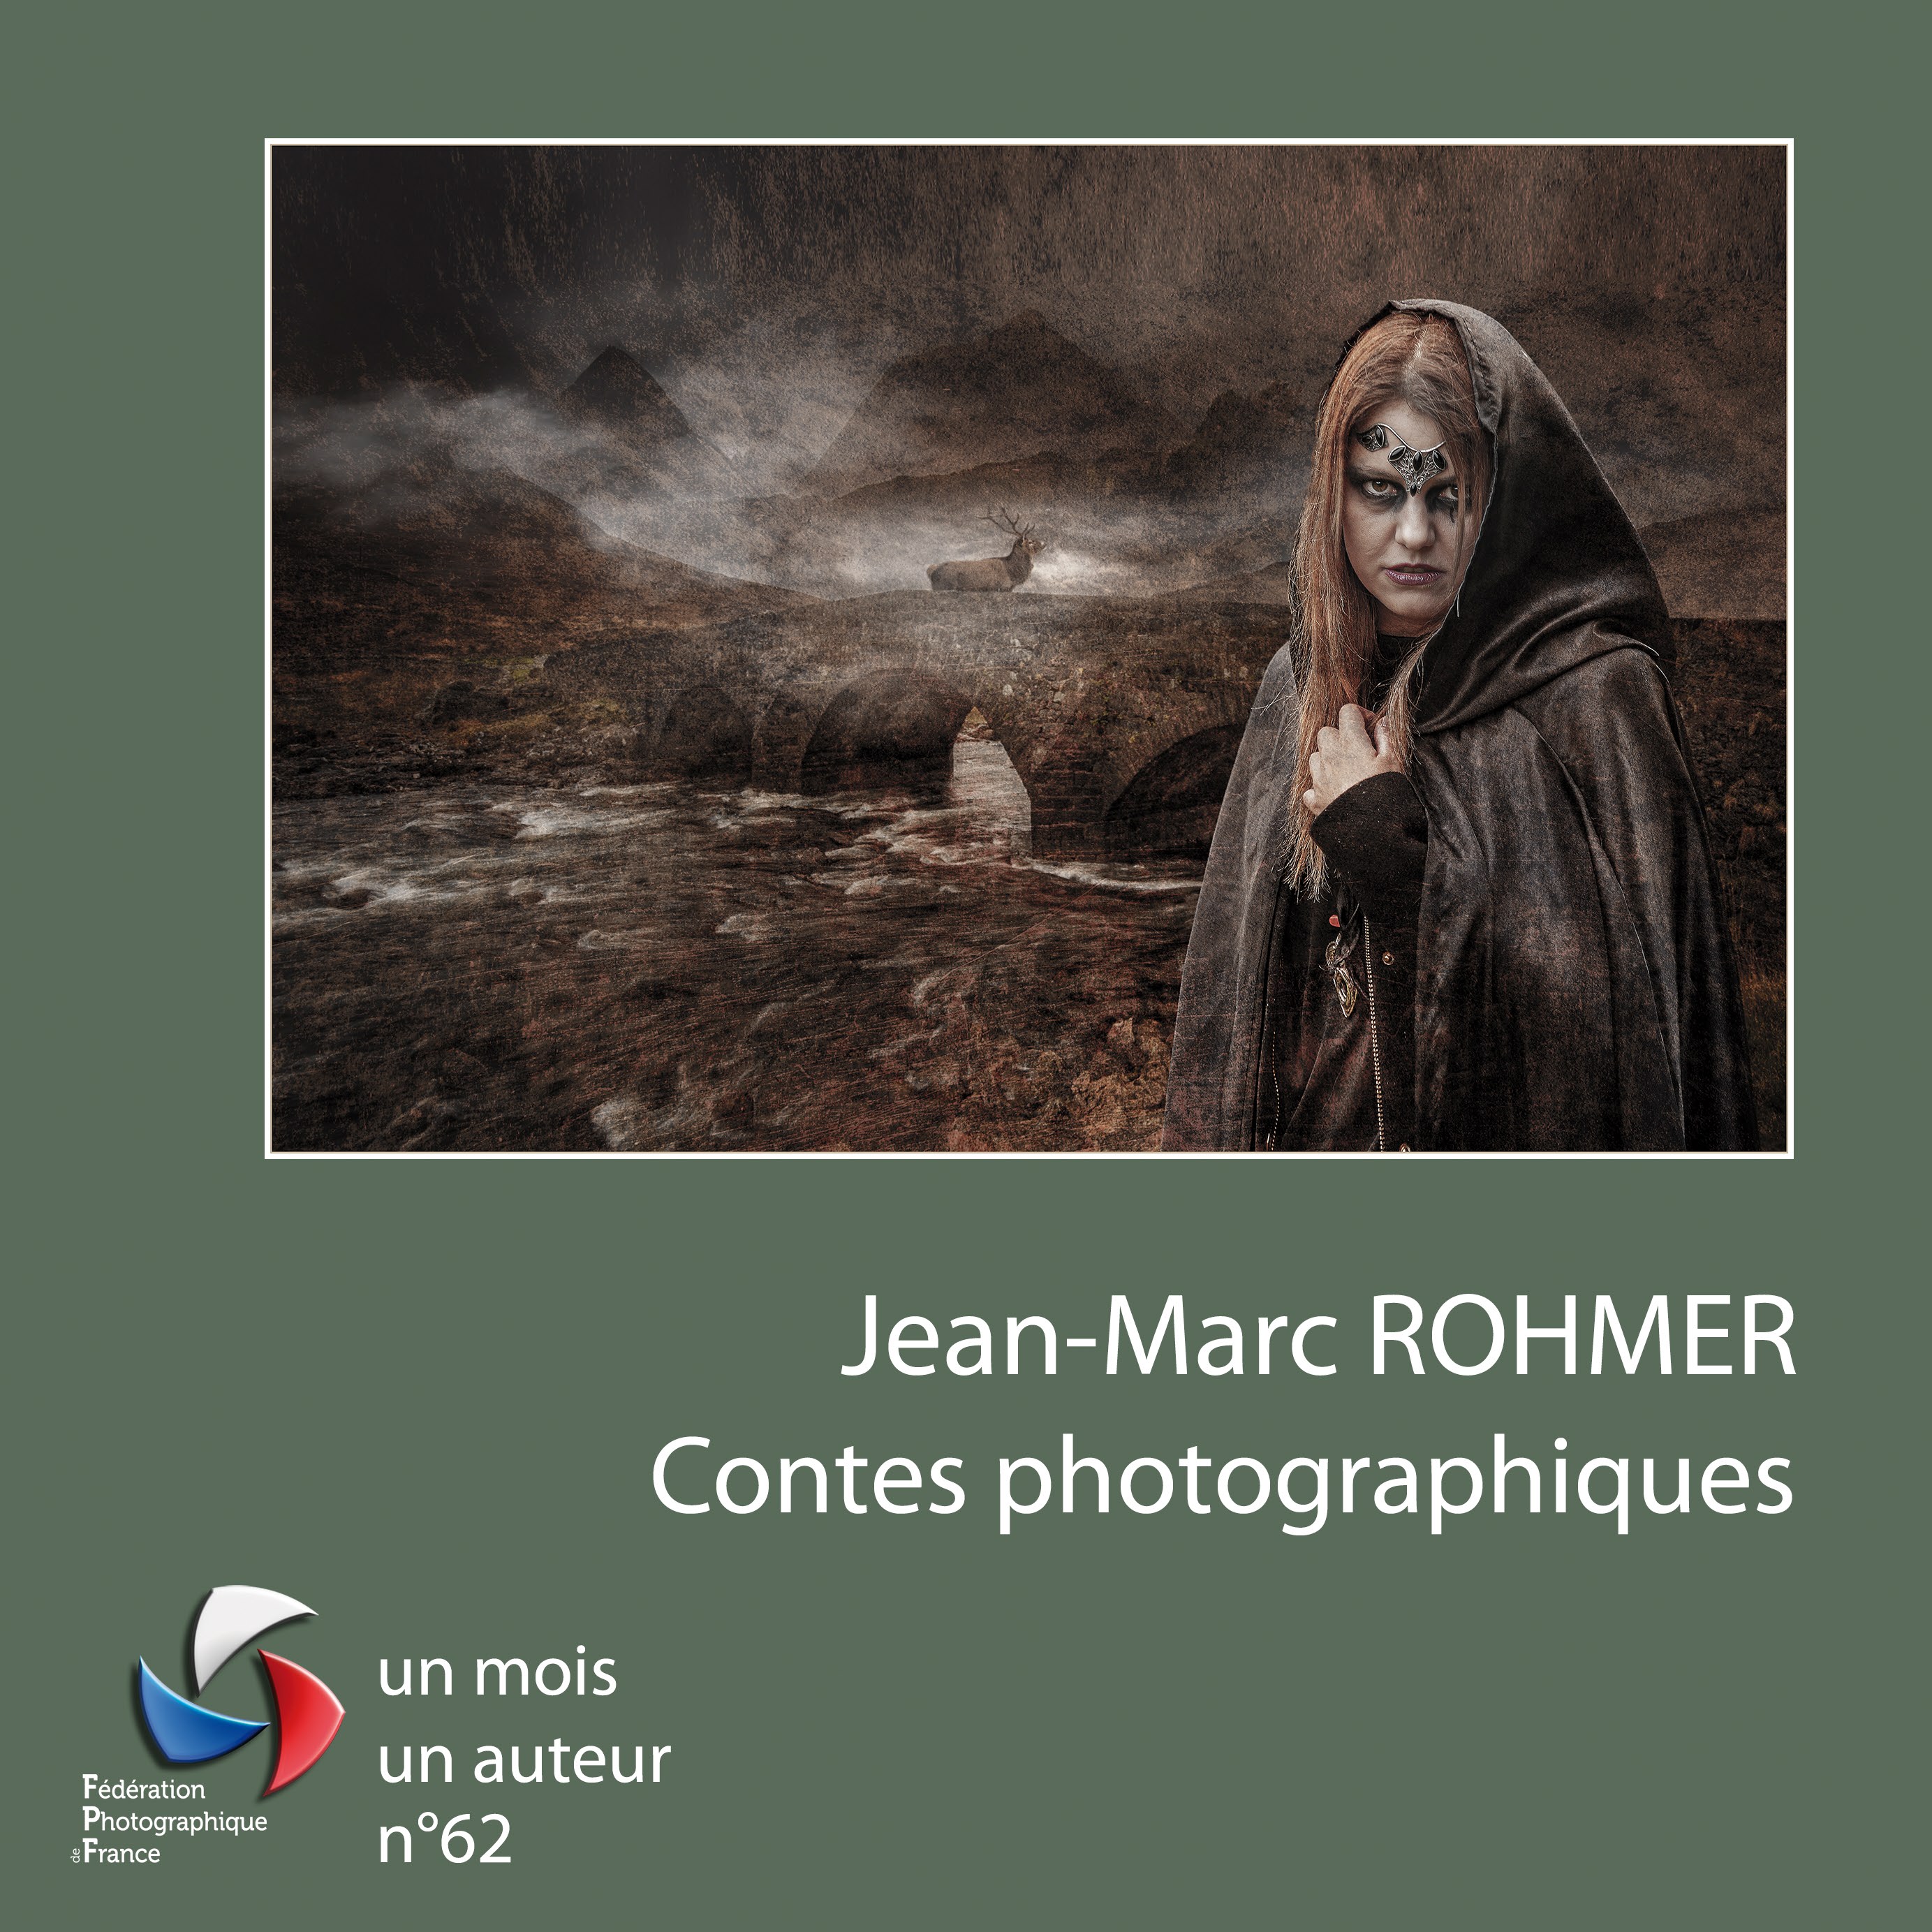 Jean-Marc Rohmer